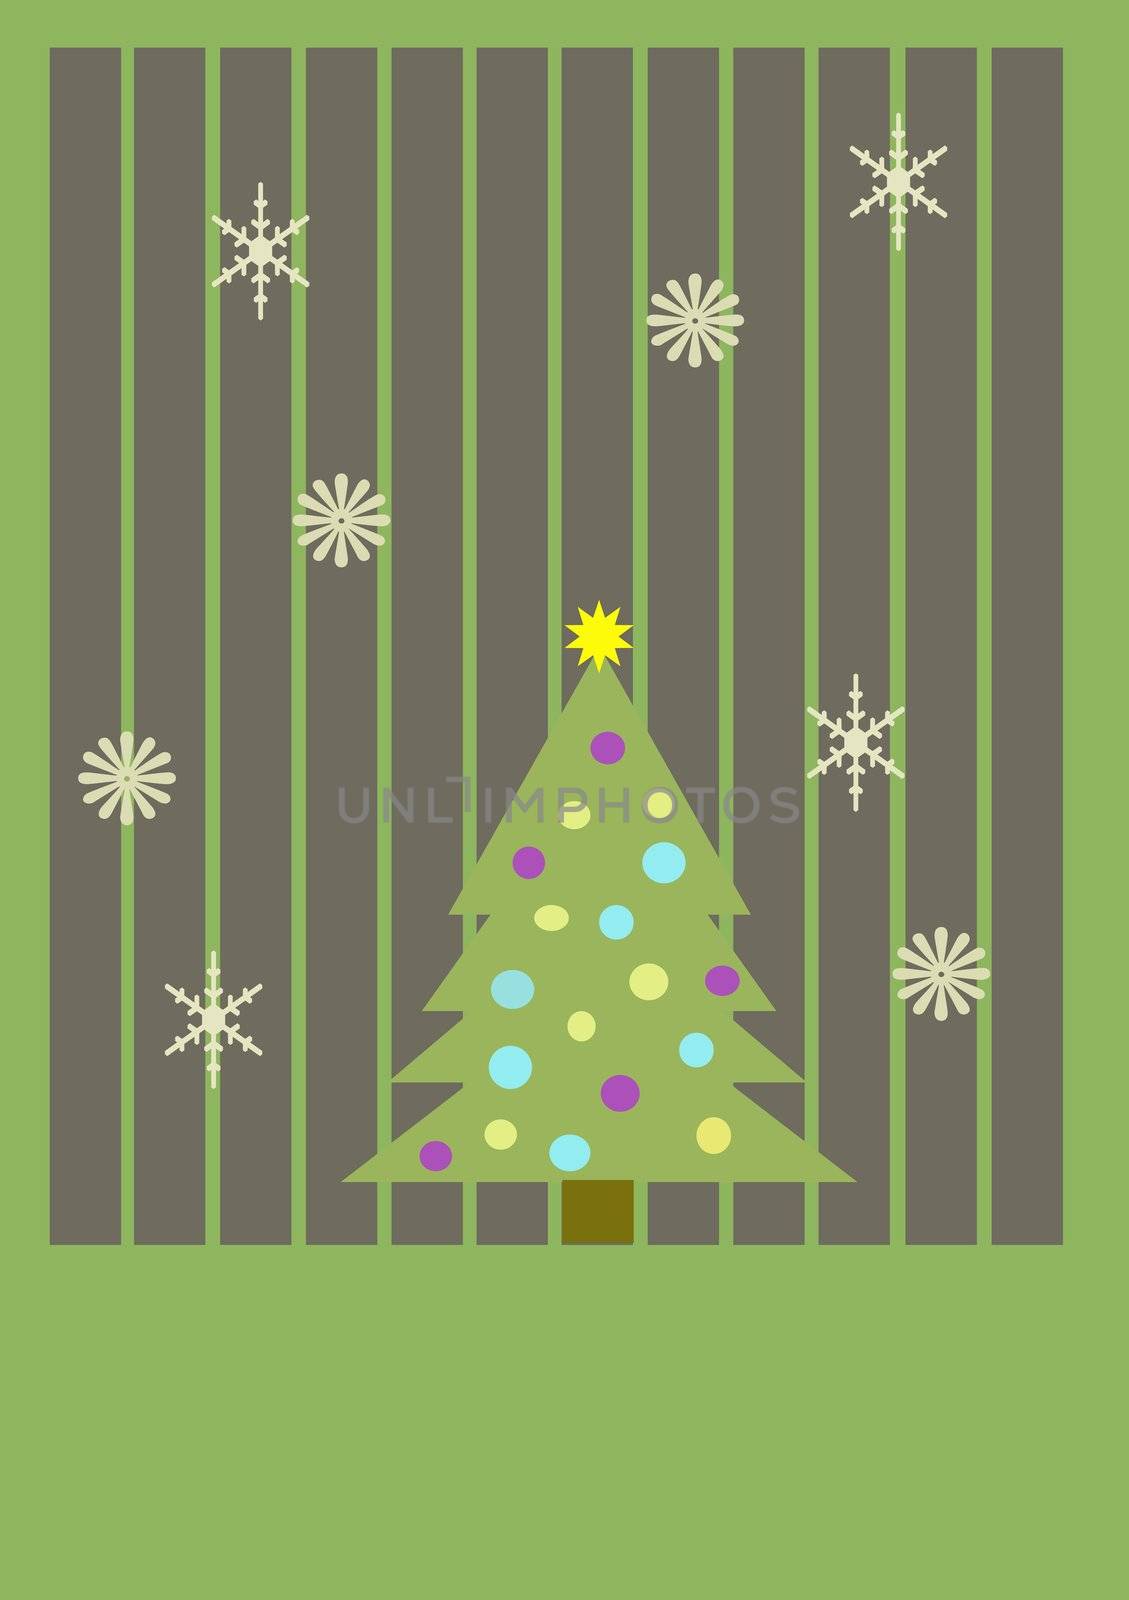 Christmas cards with pine tree